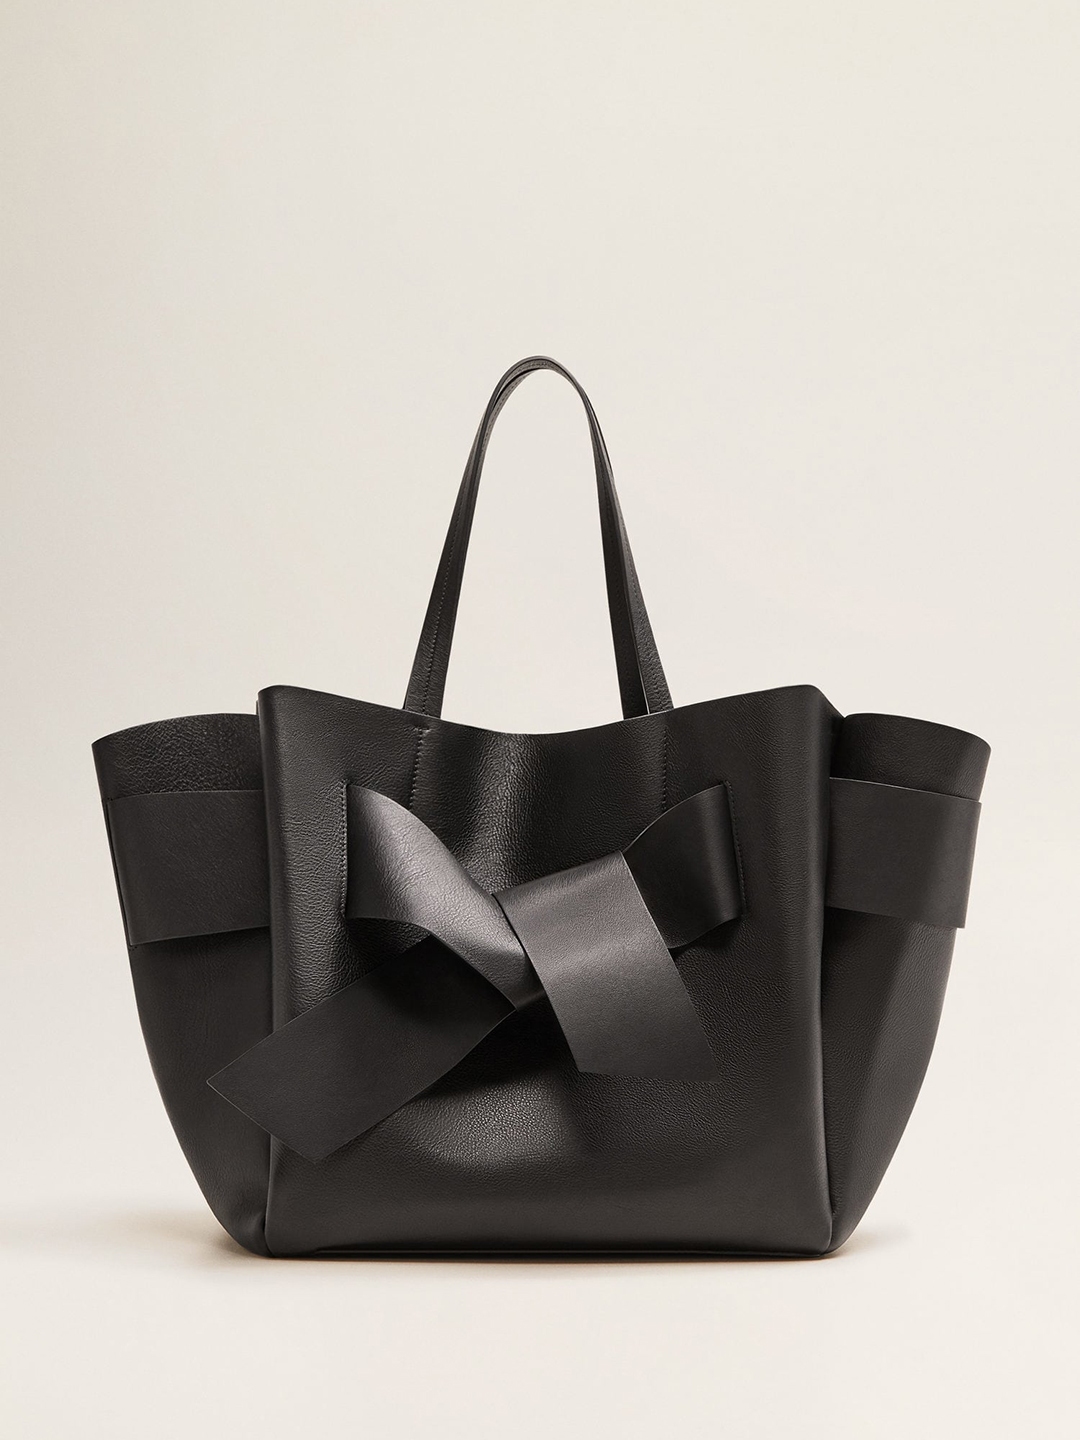 6 Women Handbags Online  Handbags Online Shopping  magicpin Blog   magicpin blog